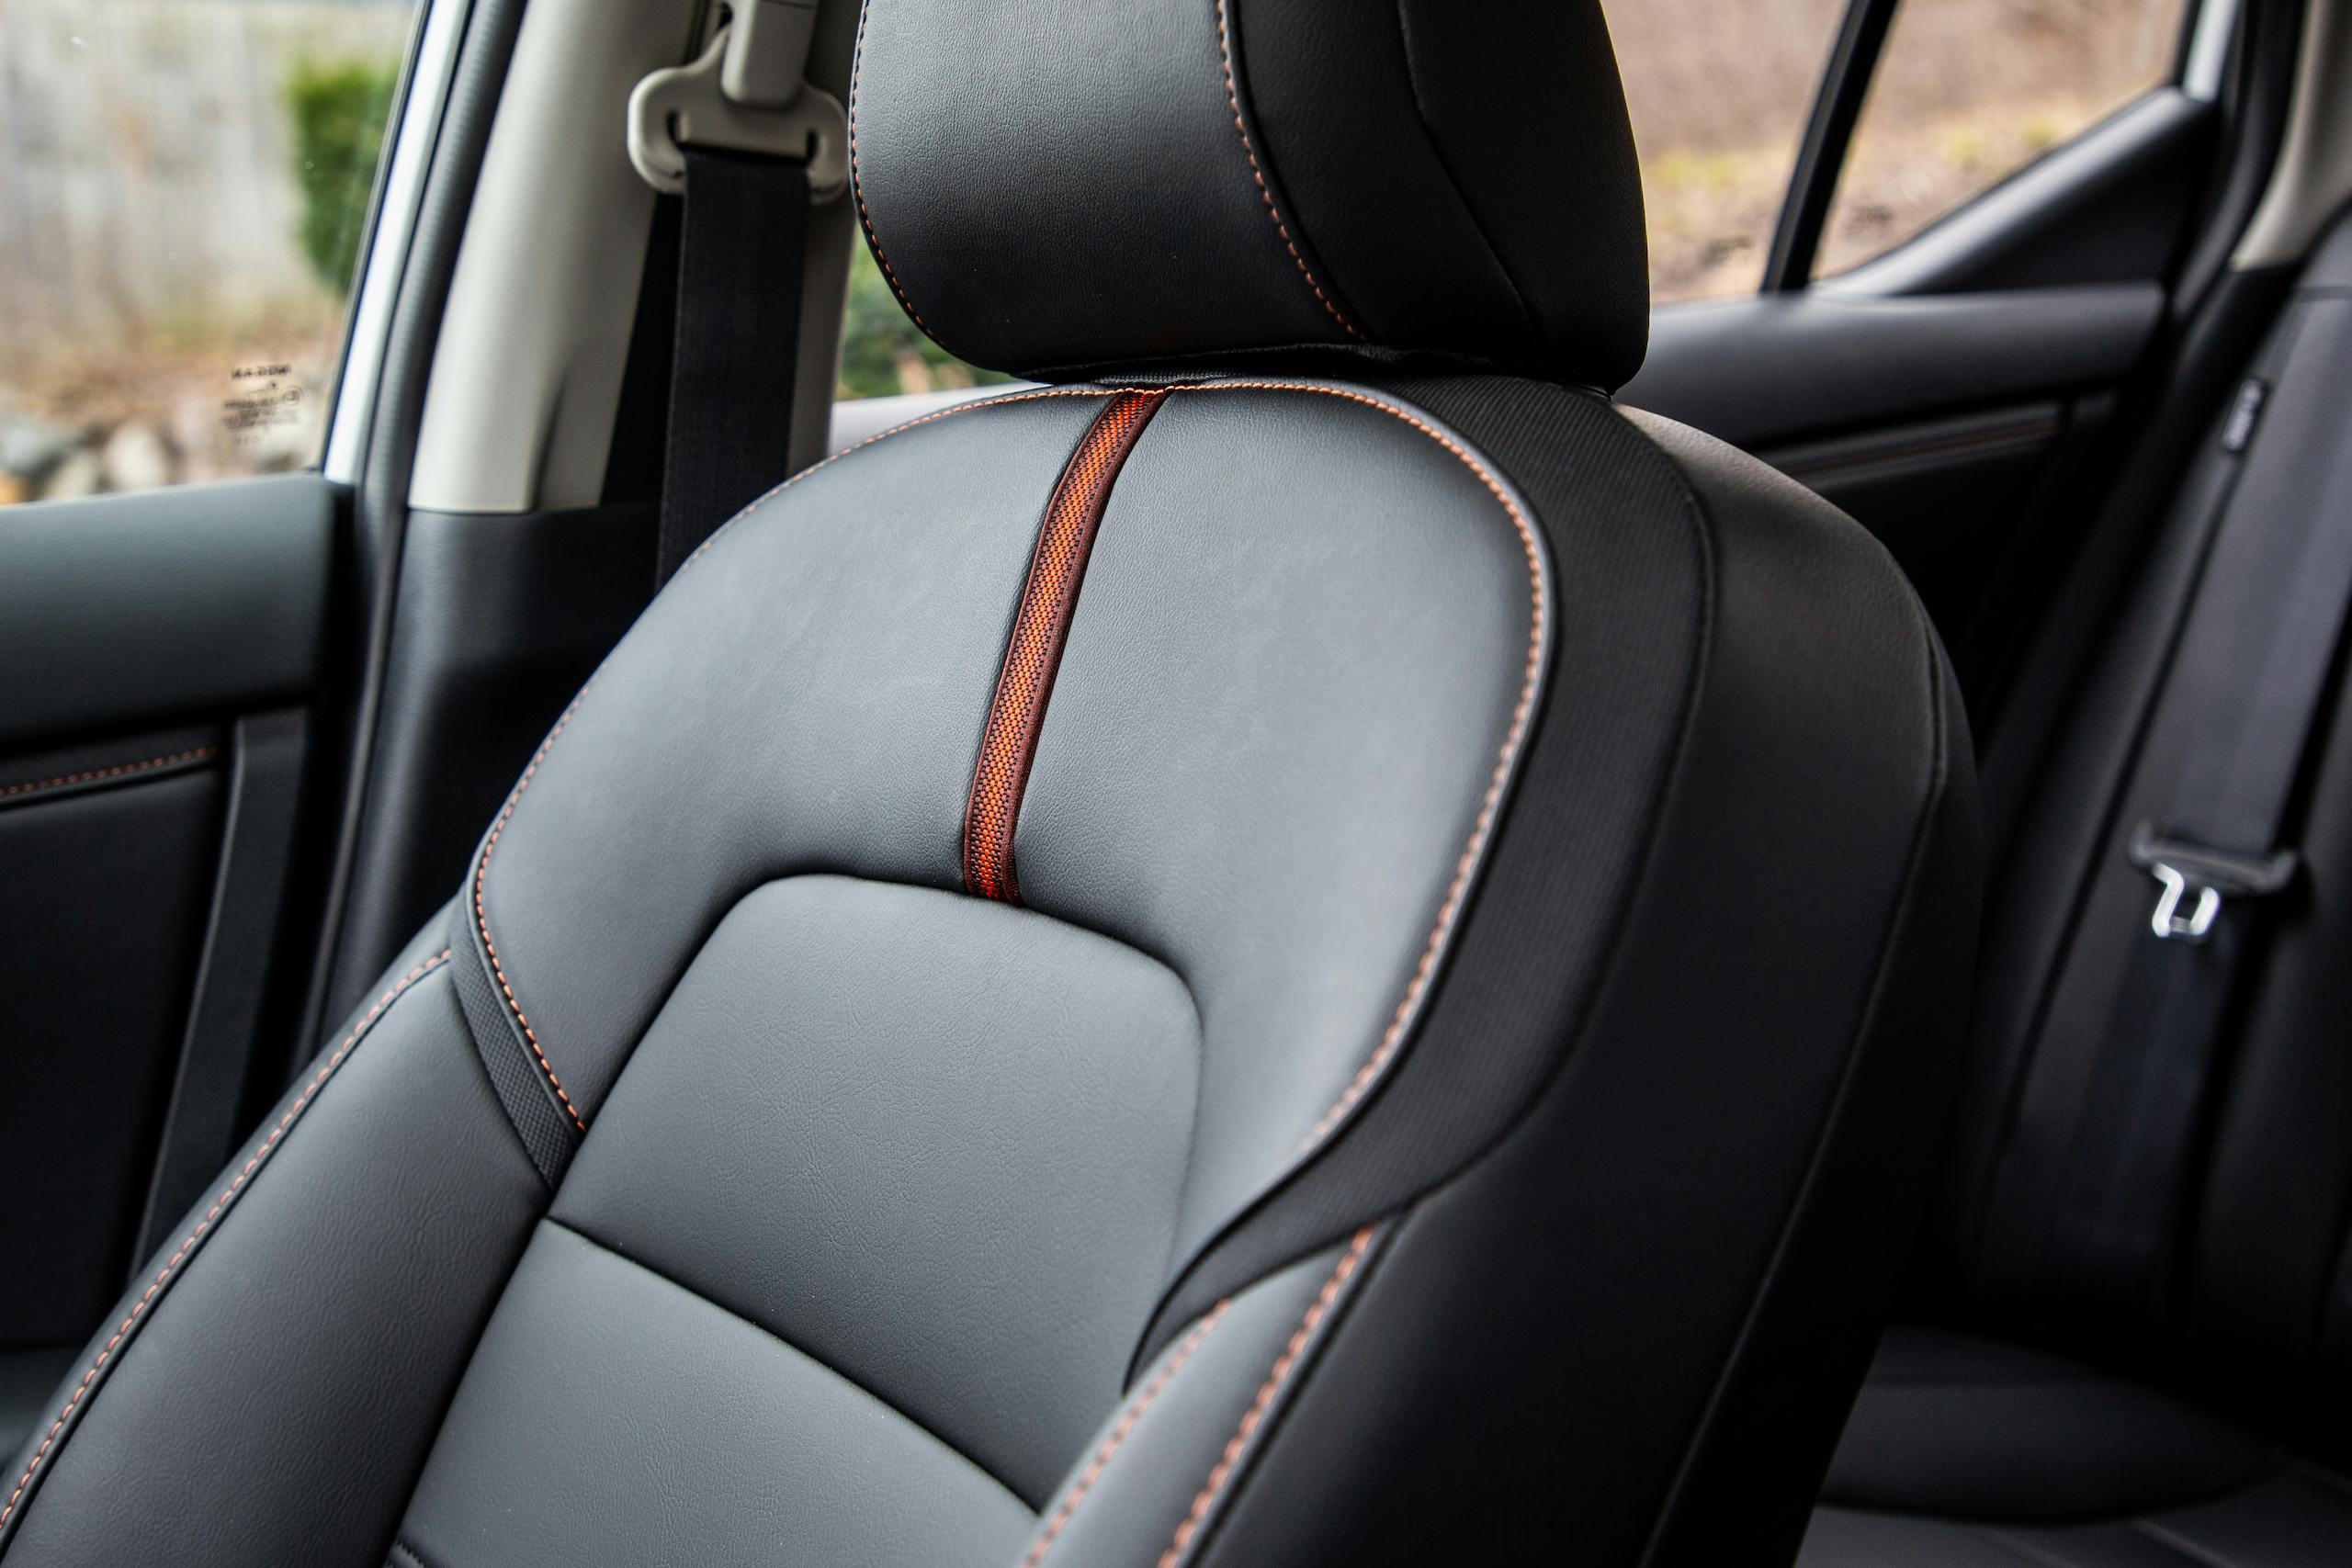 2022 Nissan Sentra SR interior seat material closeup